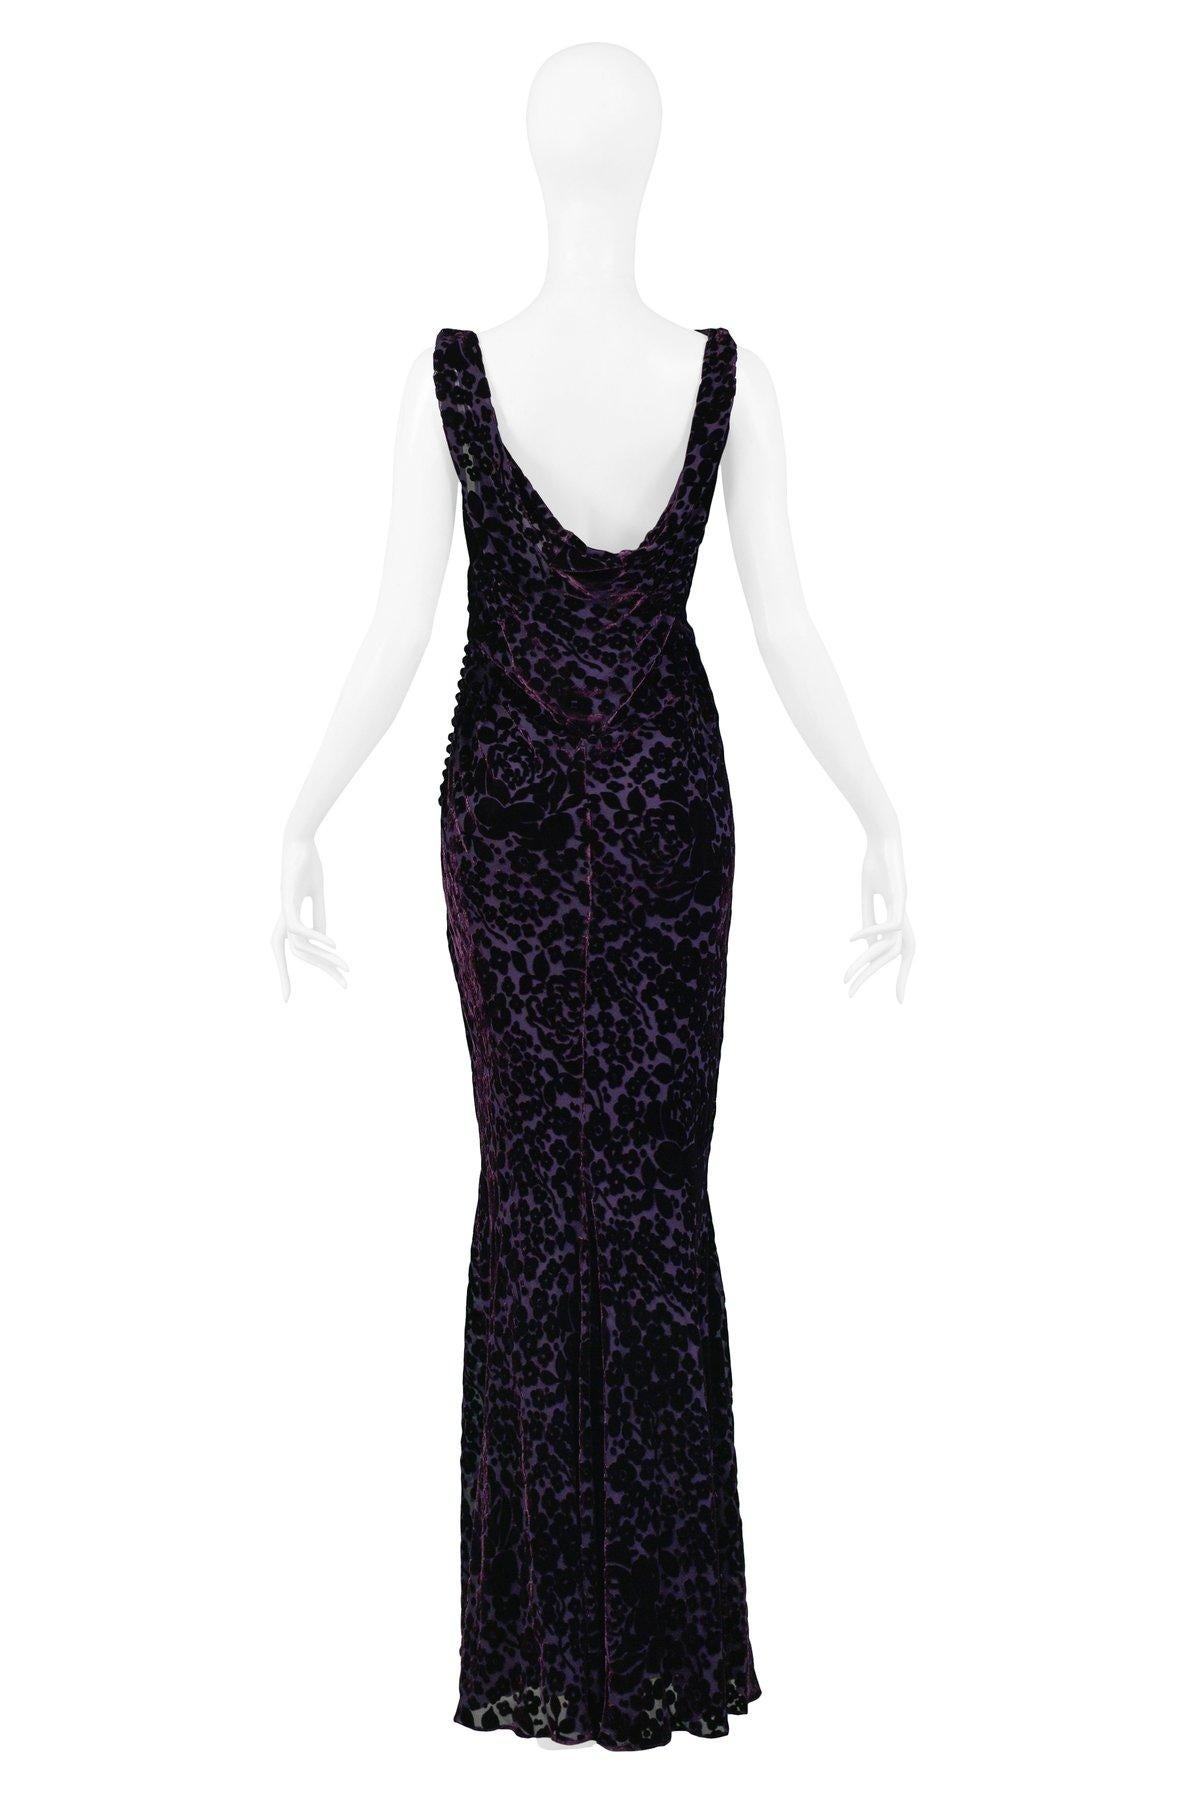 Women's John Galliano Purple & Black Floral Devore Evening Gown